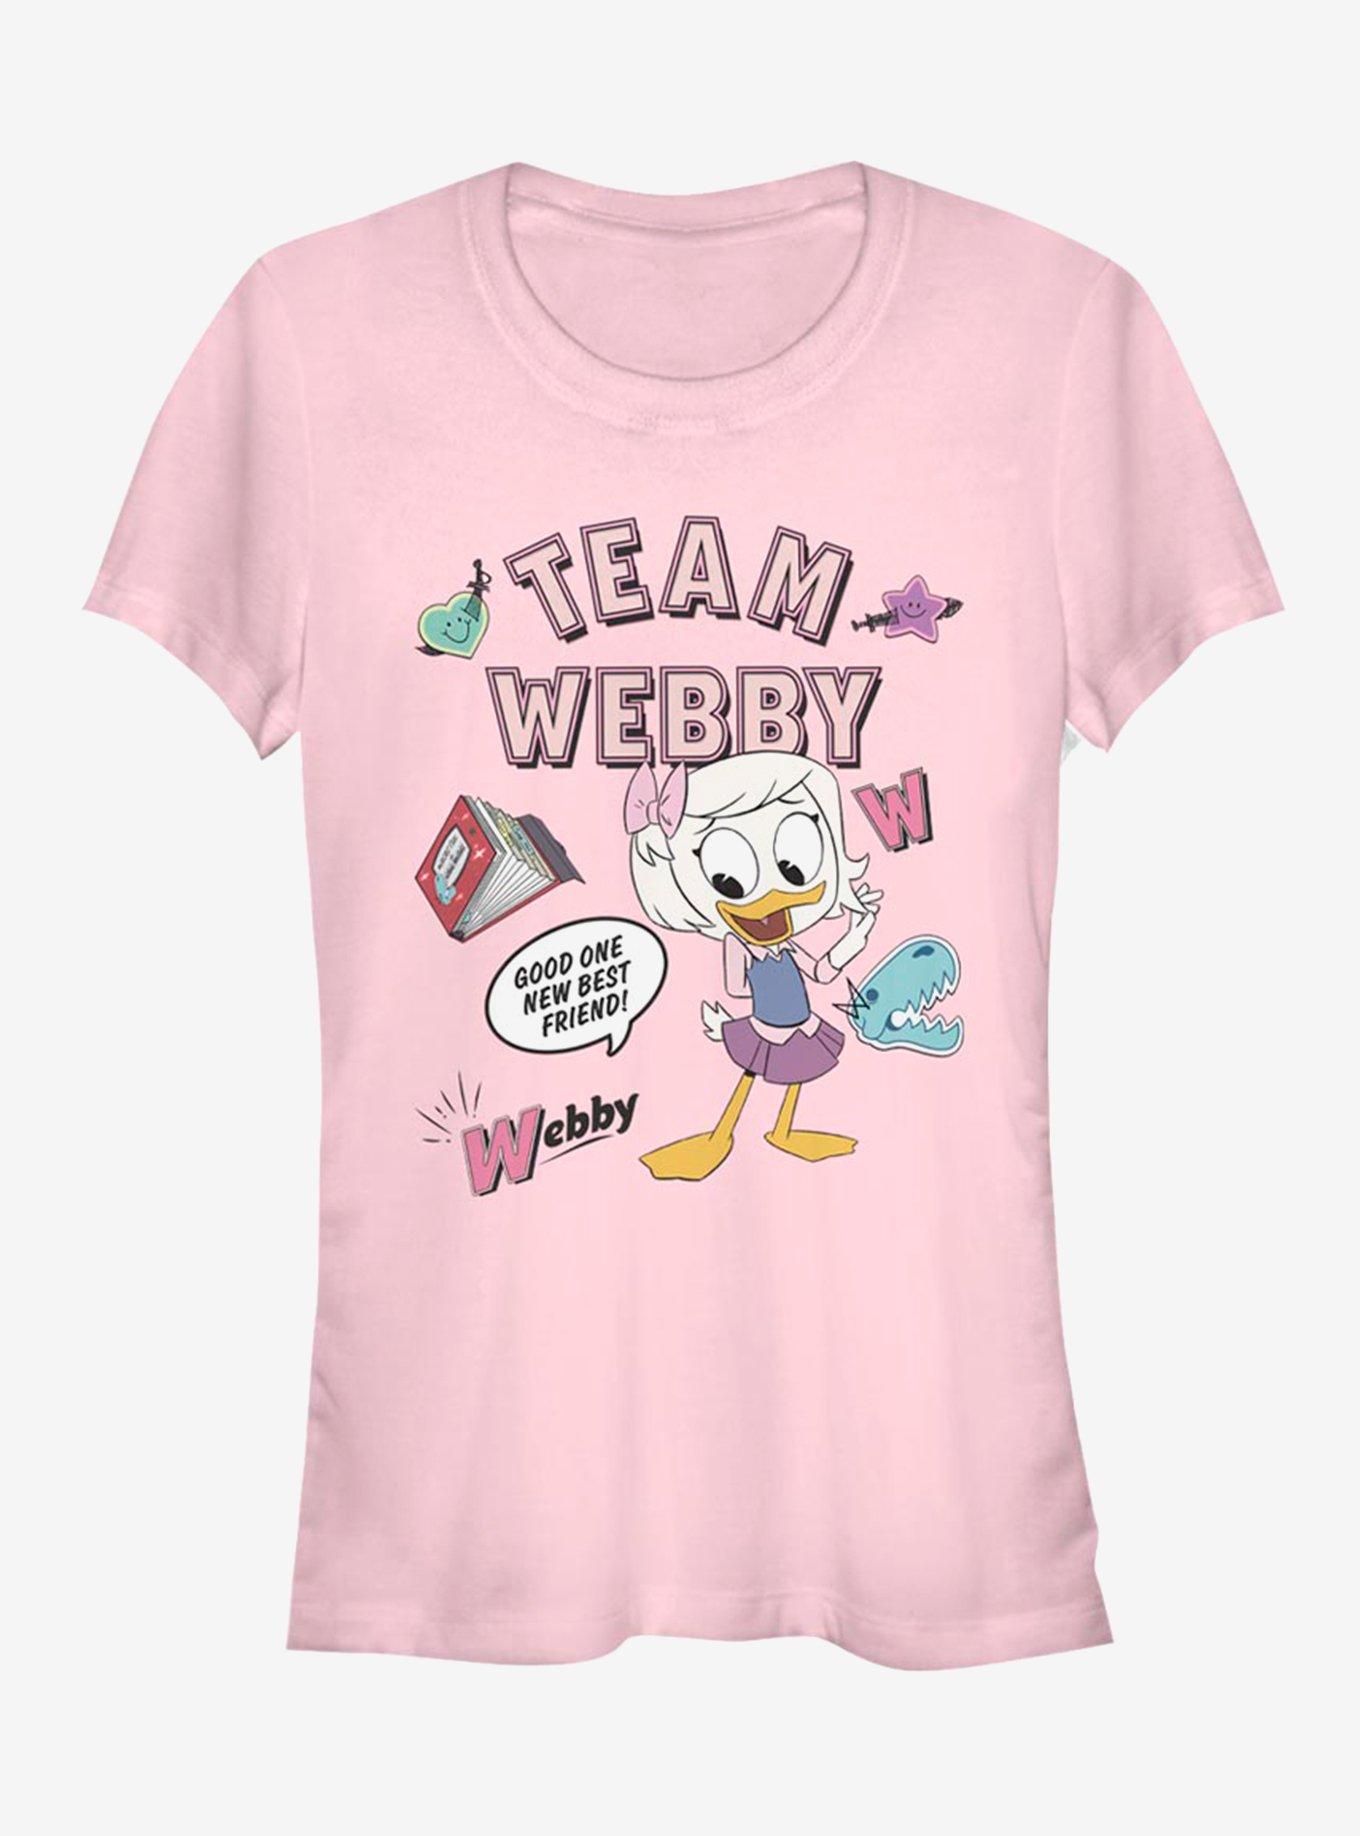 Disney DuckTales Team Webby Girls T-Shirt, LIGHT PINK, hi-res